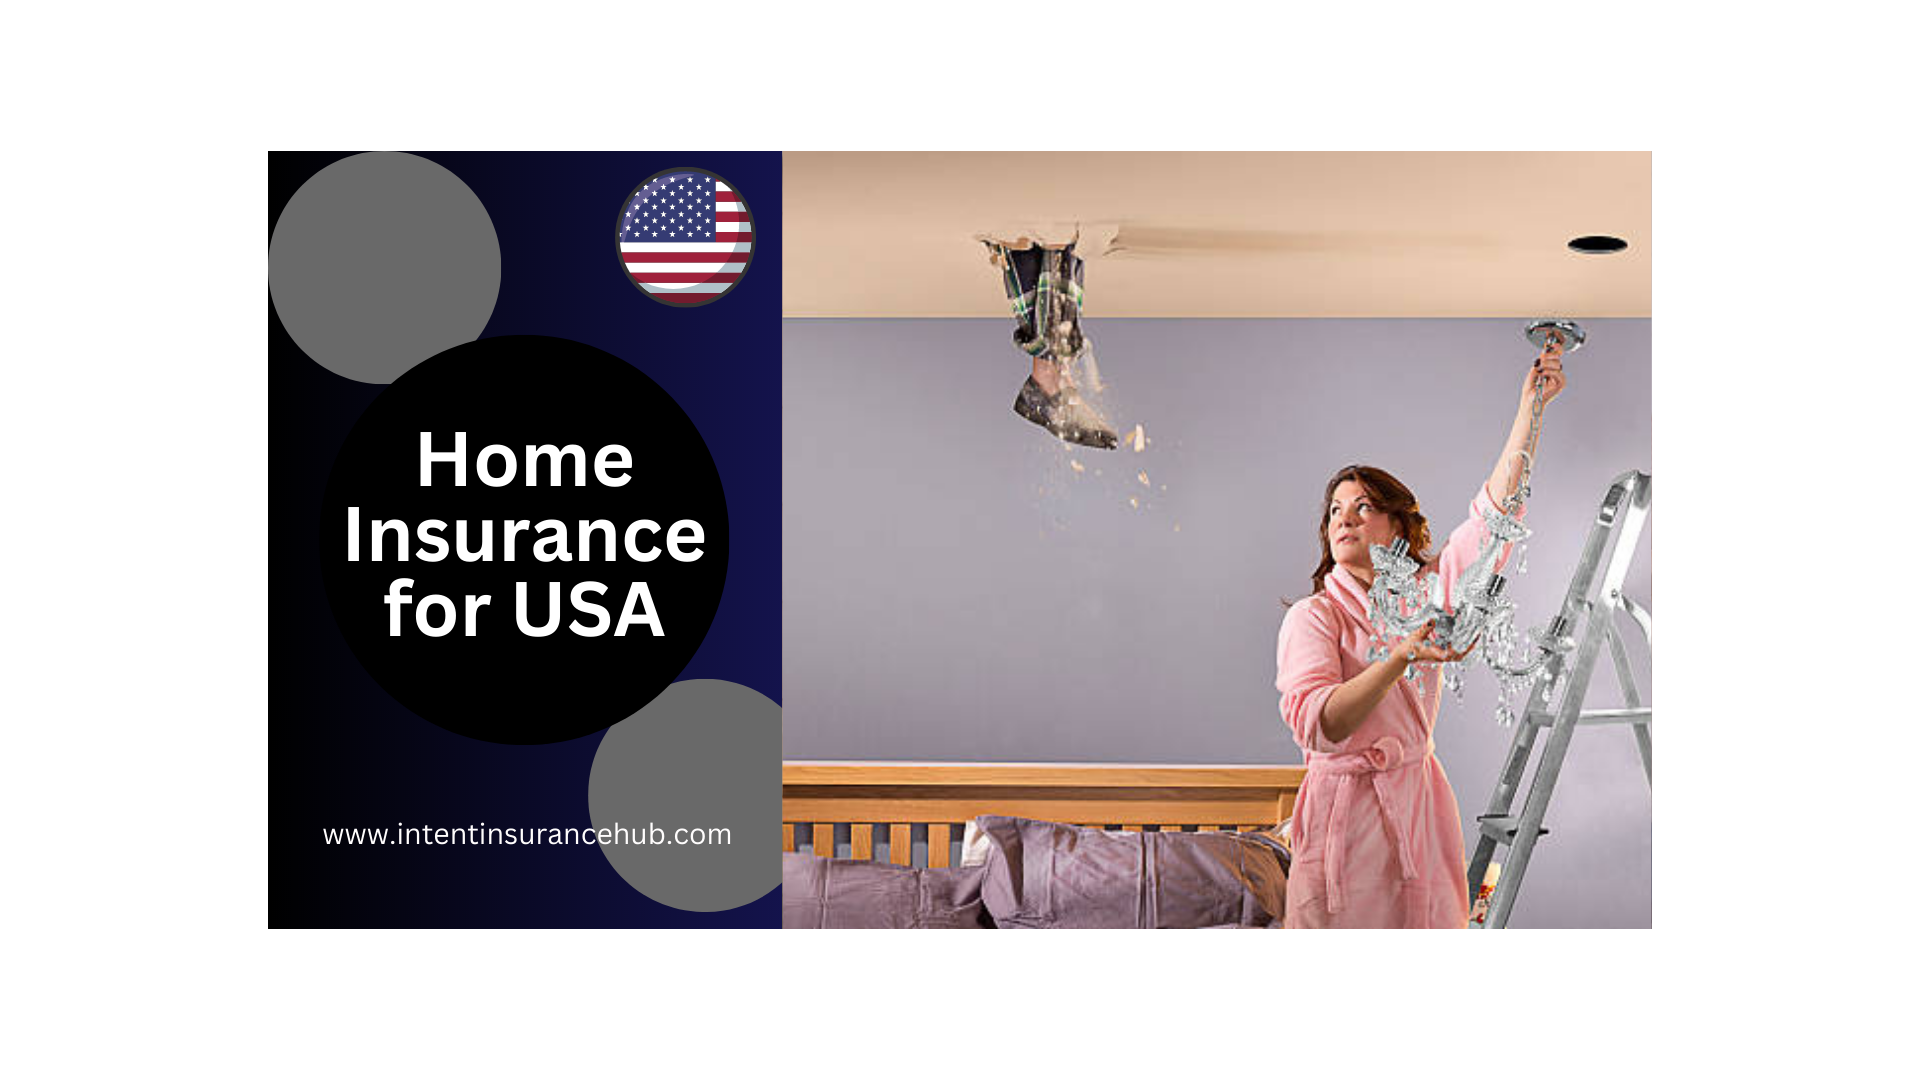 Home Insurance for USA